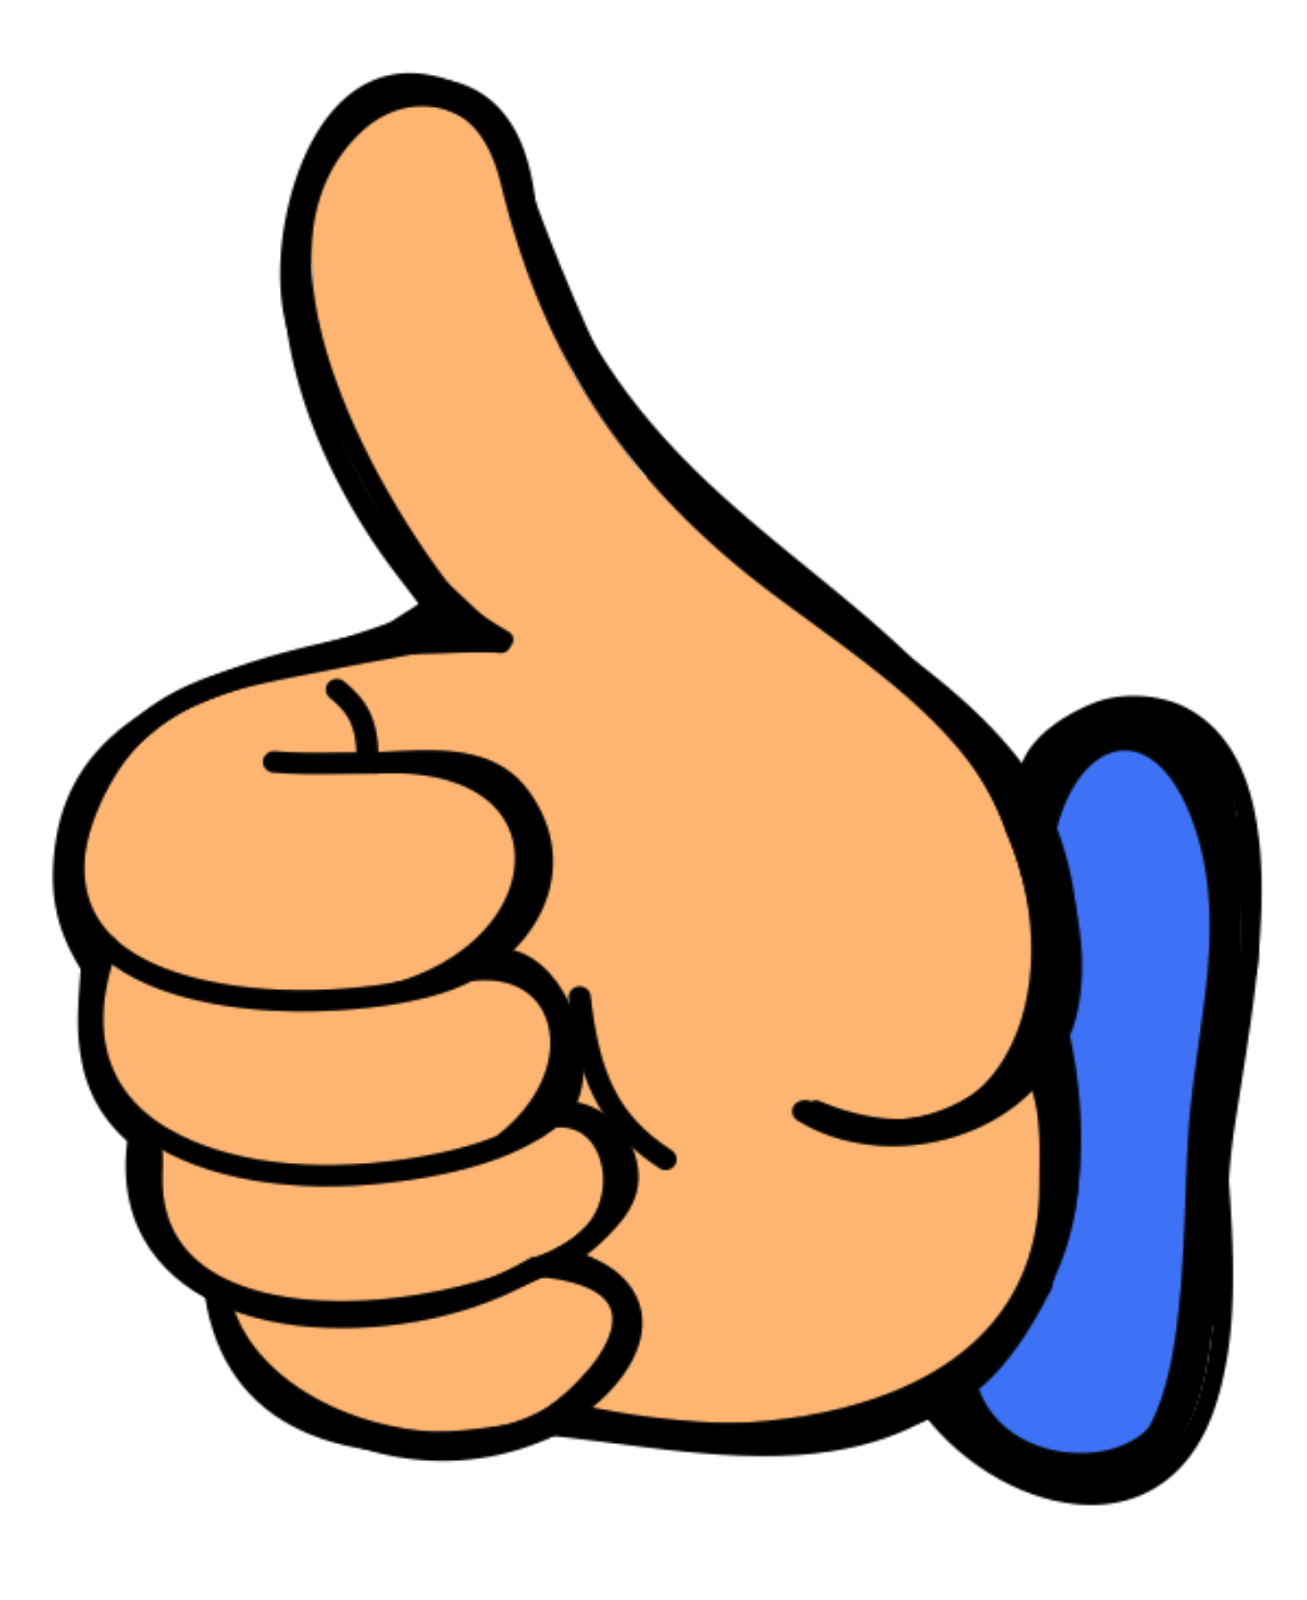 Thumbs Up Emoji PNG Image File